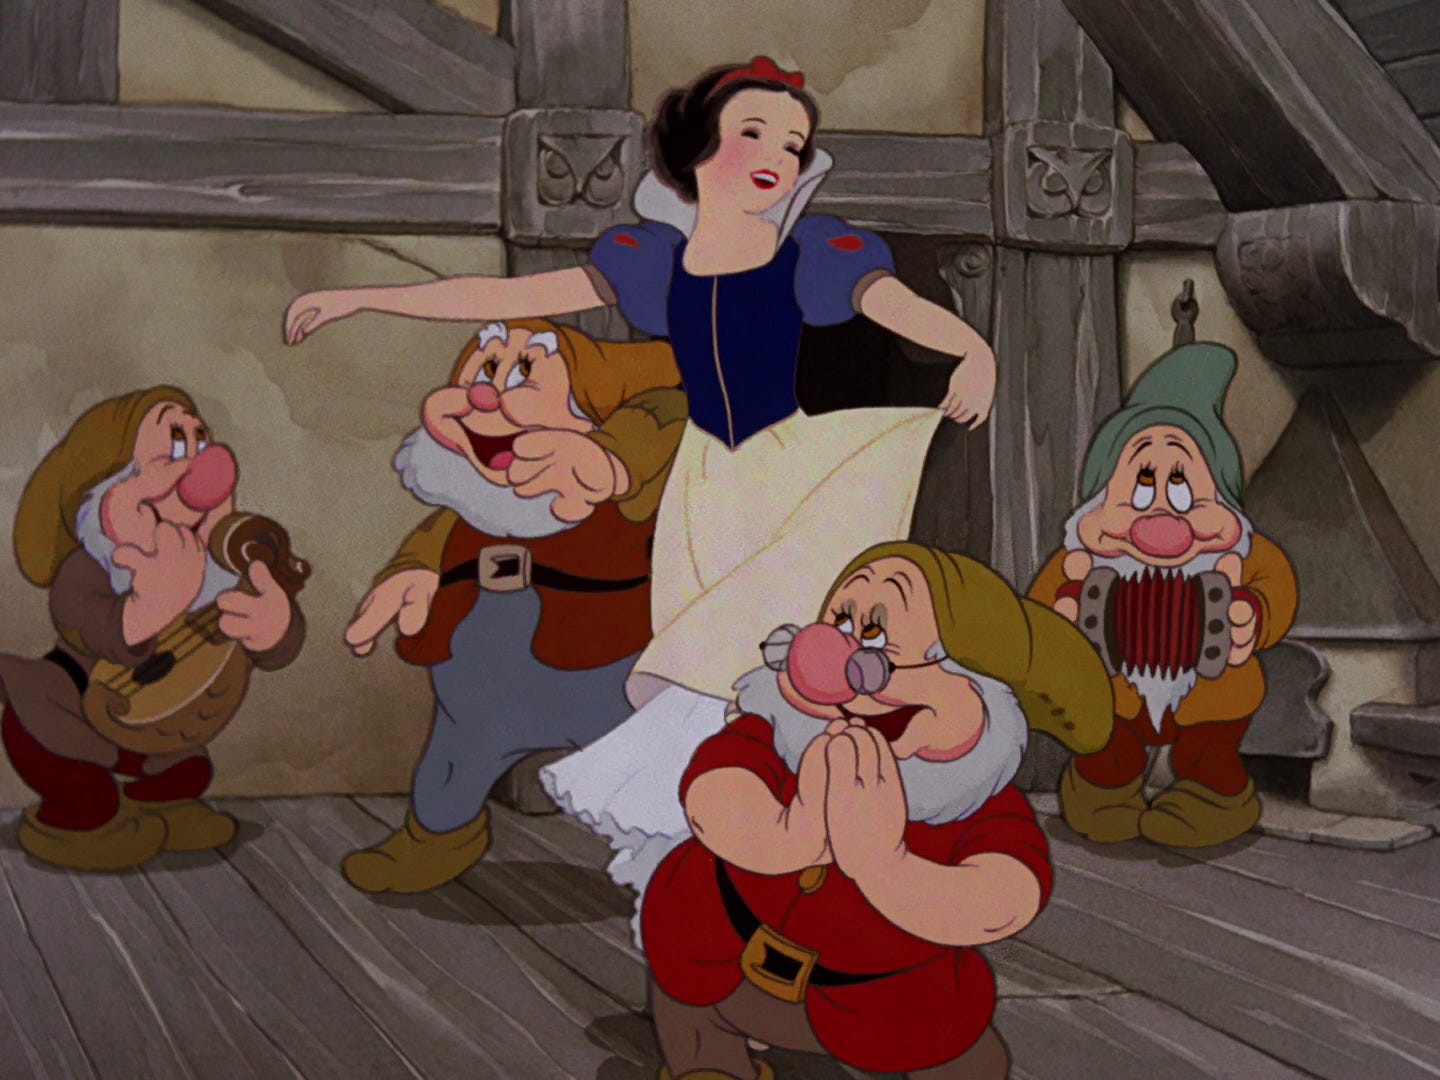 Default Disney: Snow White and the Seven Dwarfs (1937) - Hilarity by Default